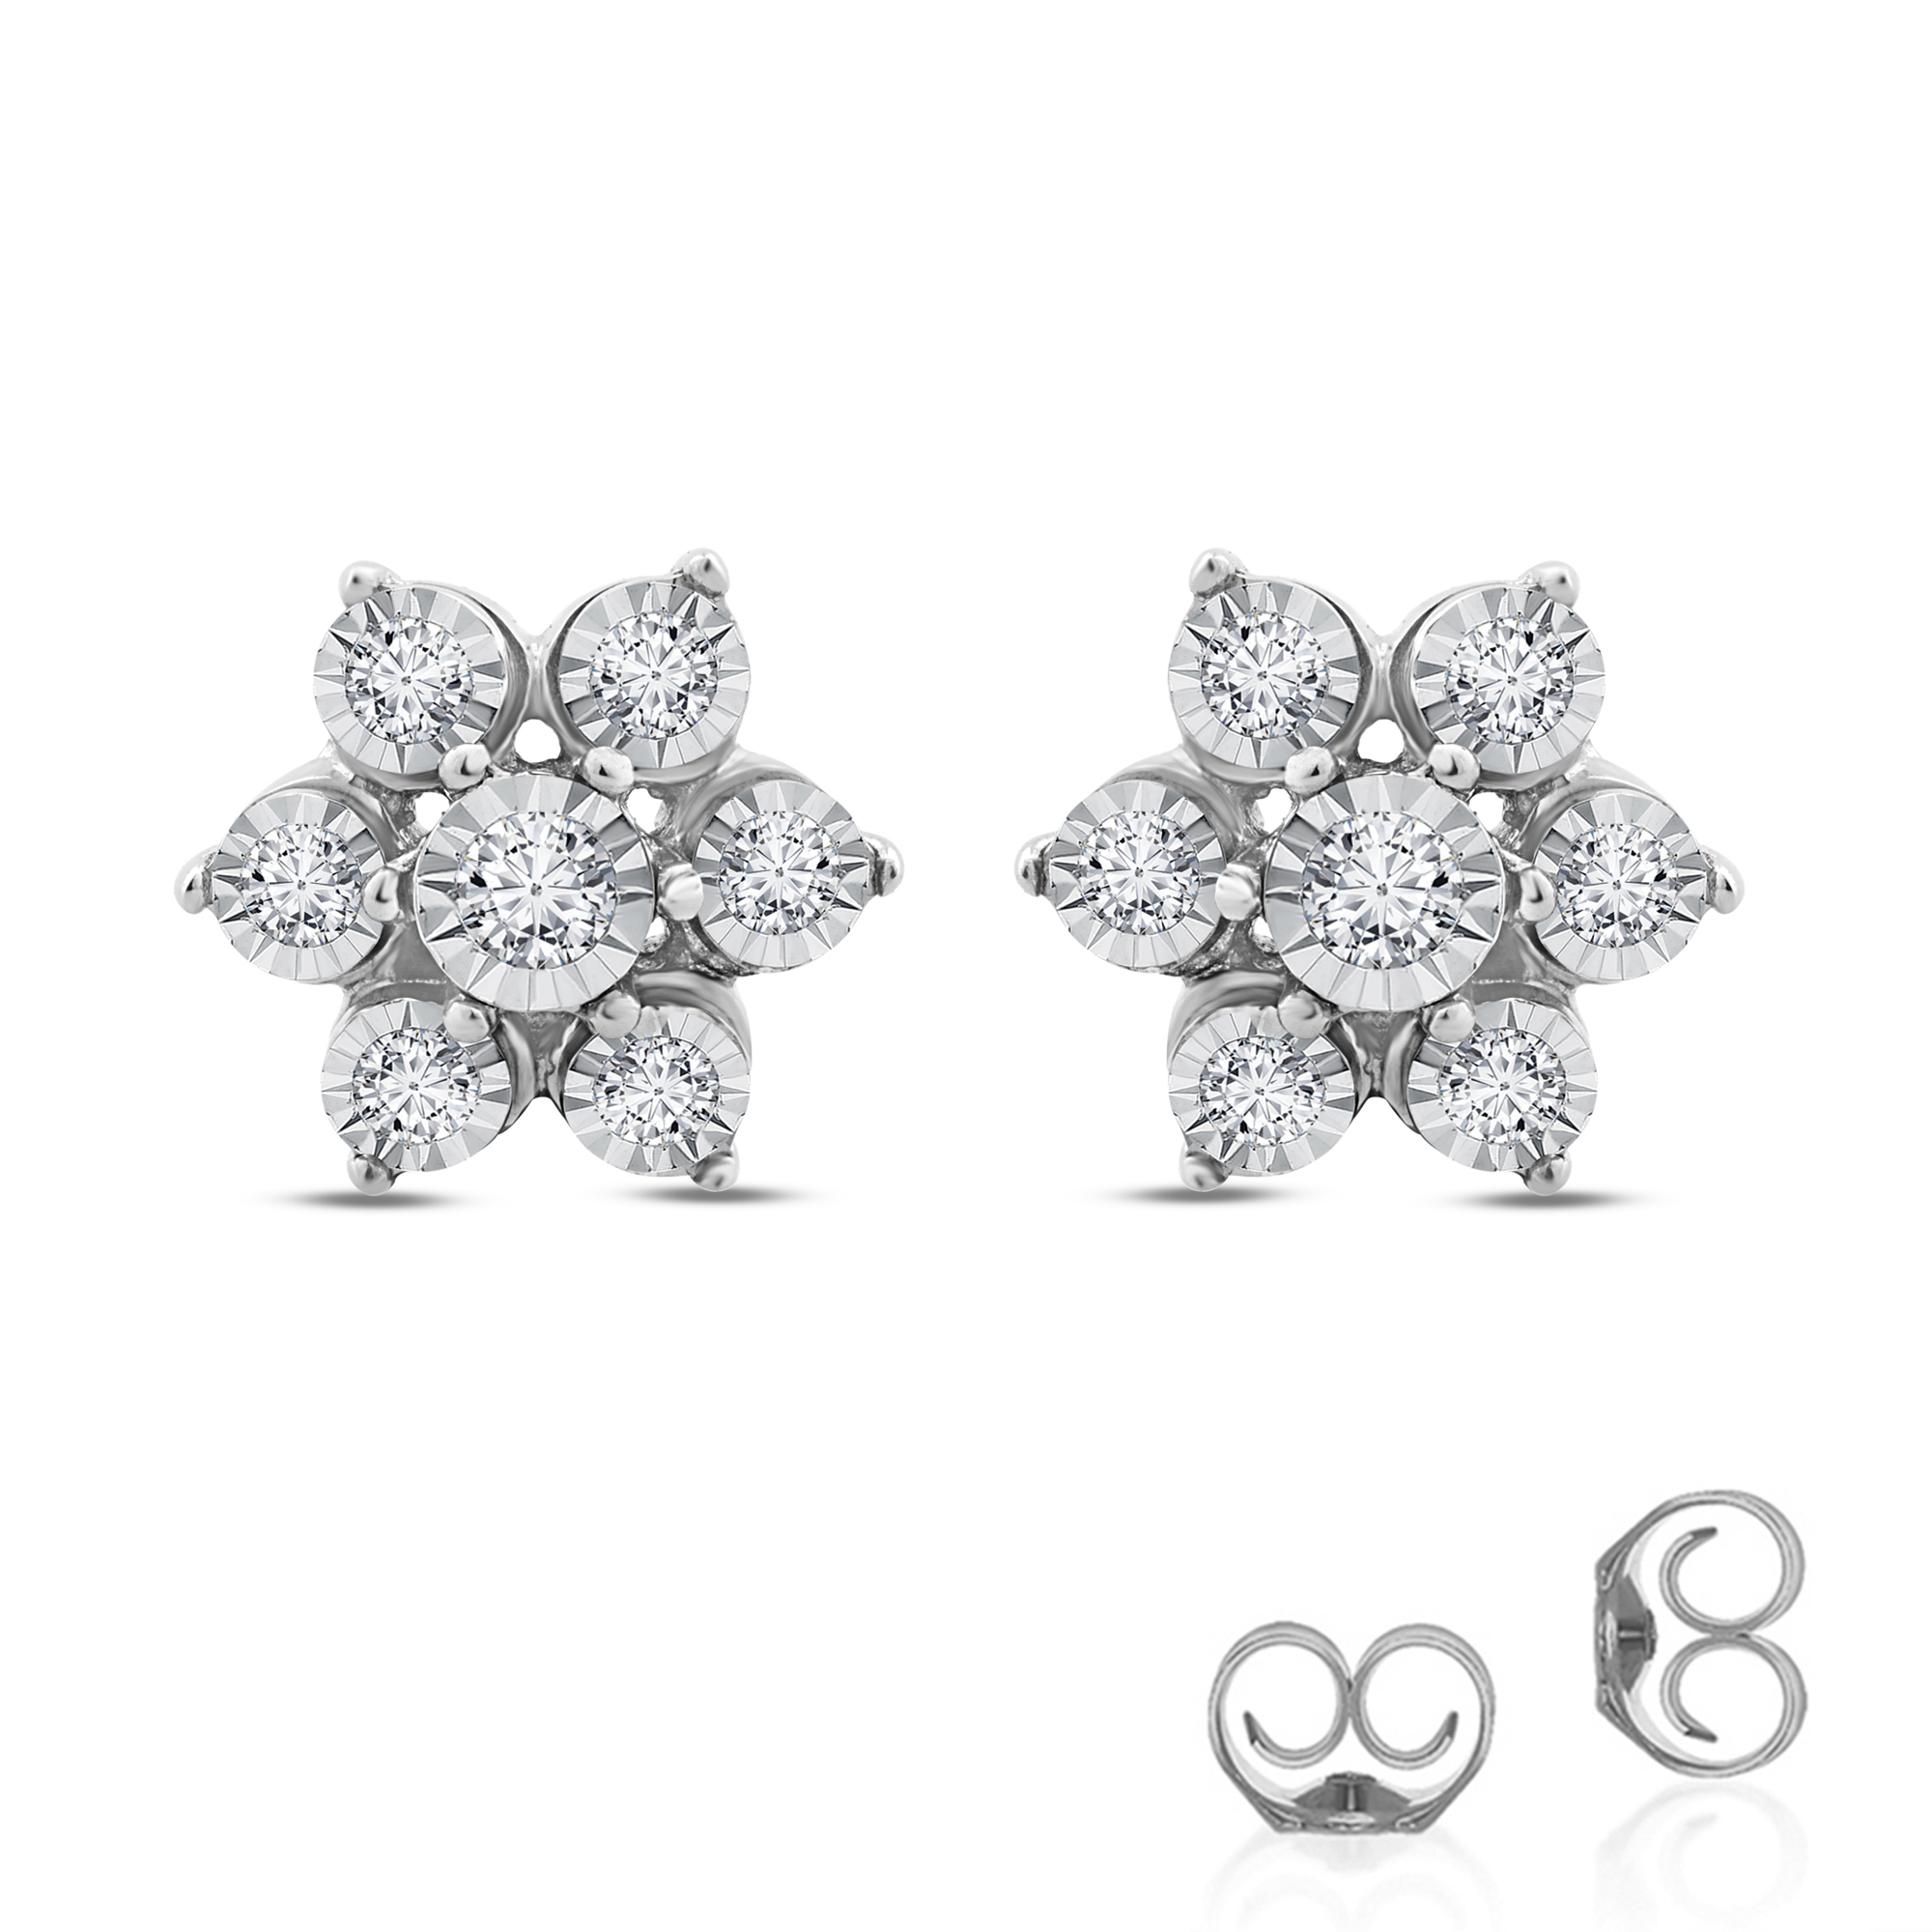 1/4 CT TW Star Shaped Silver Lab Grown Diamond Earrings | Cara